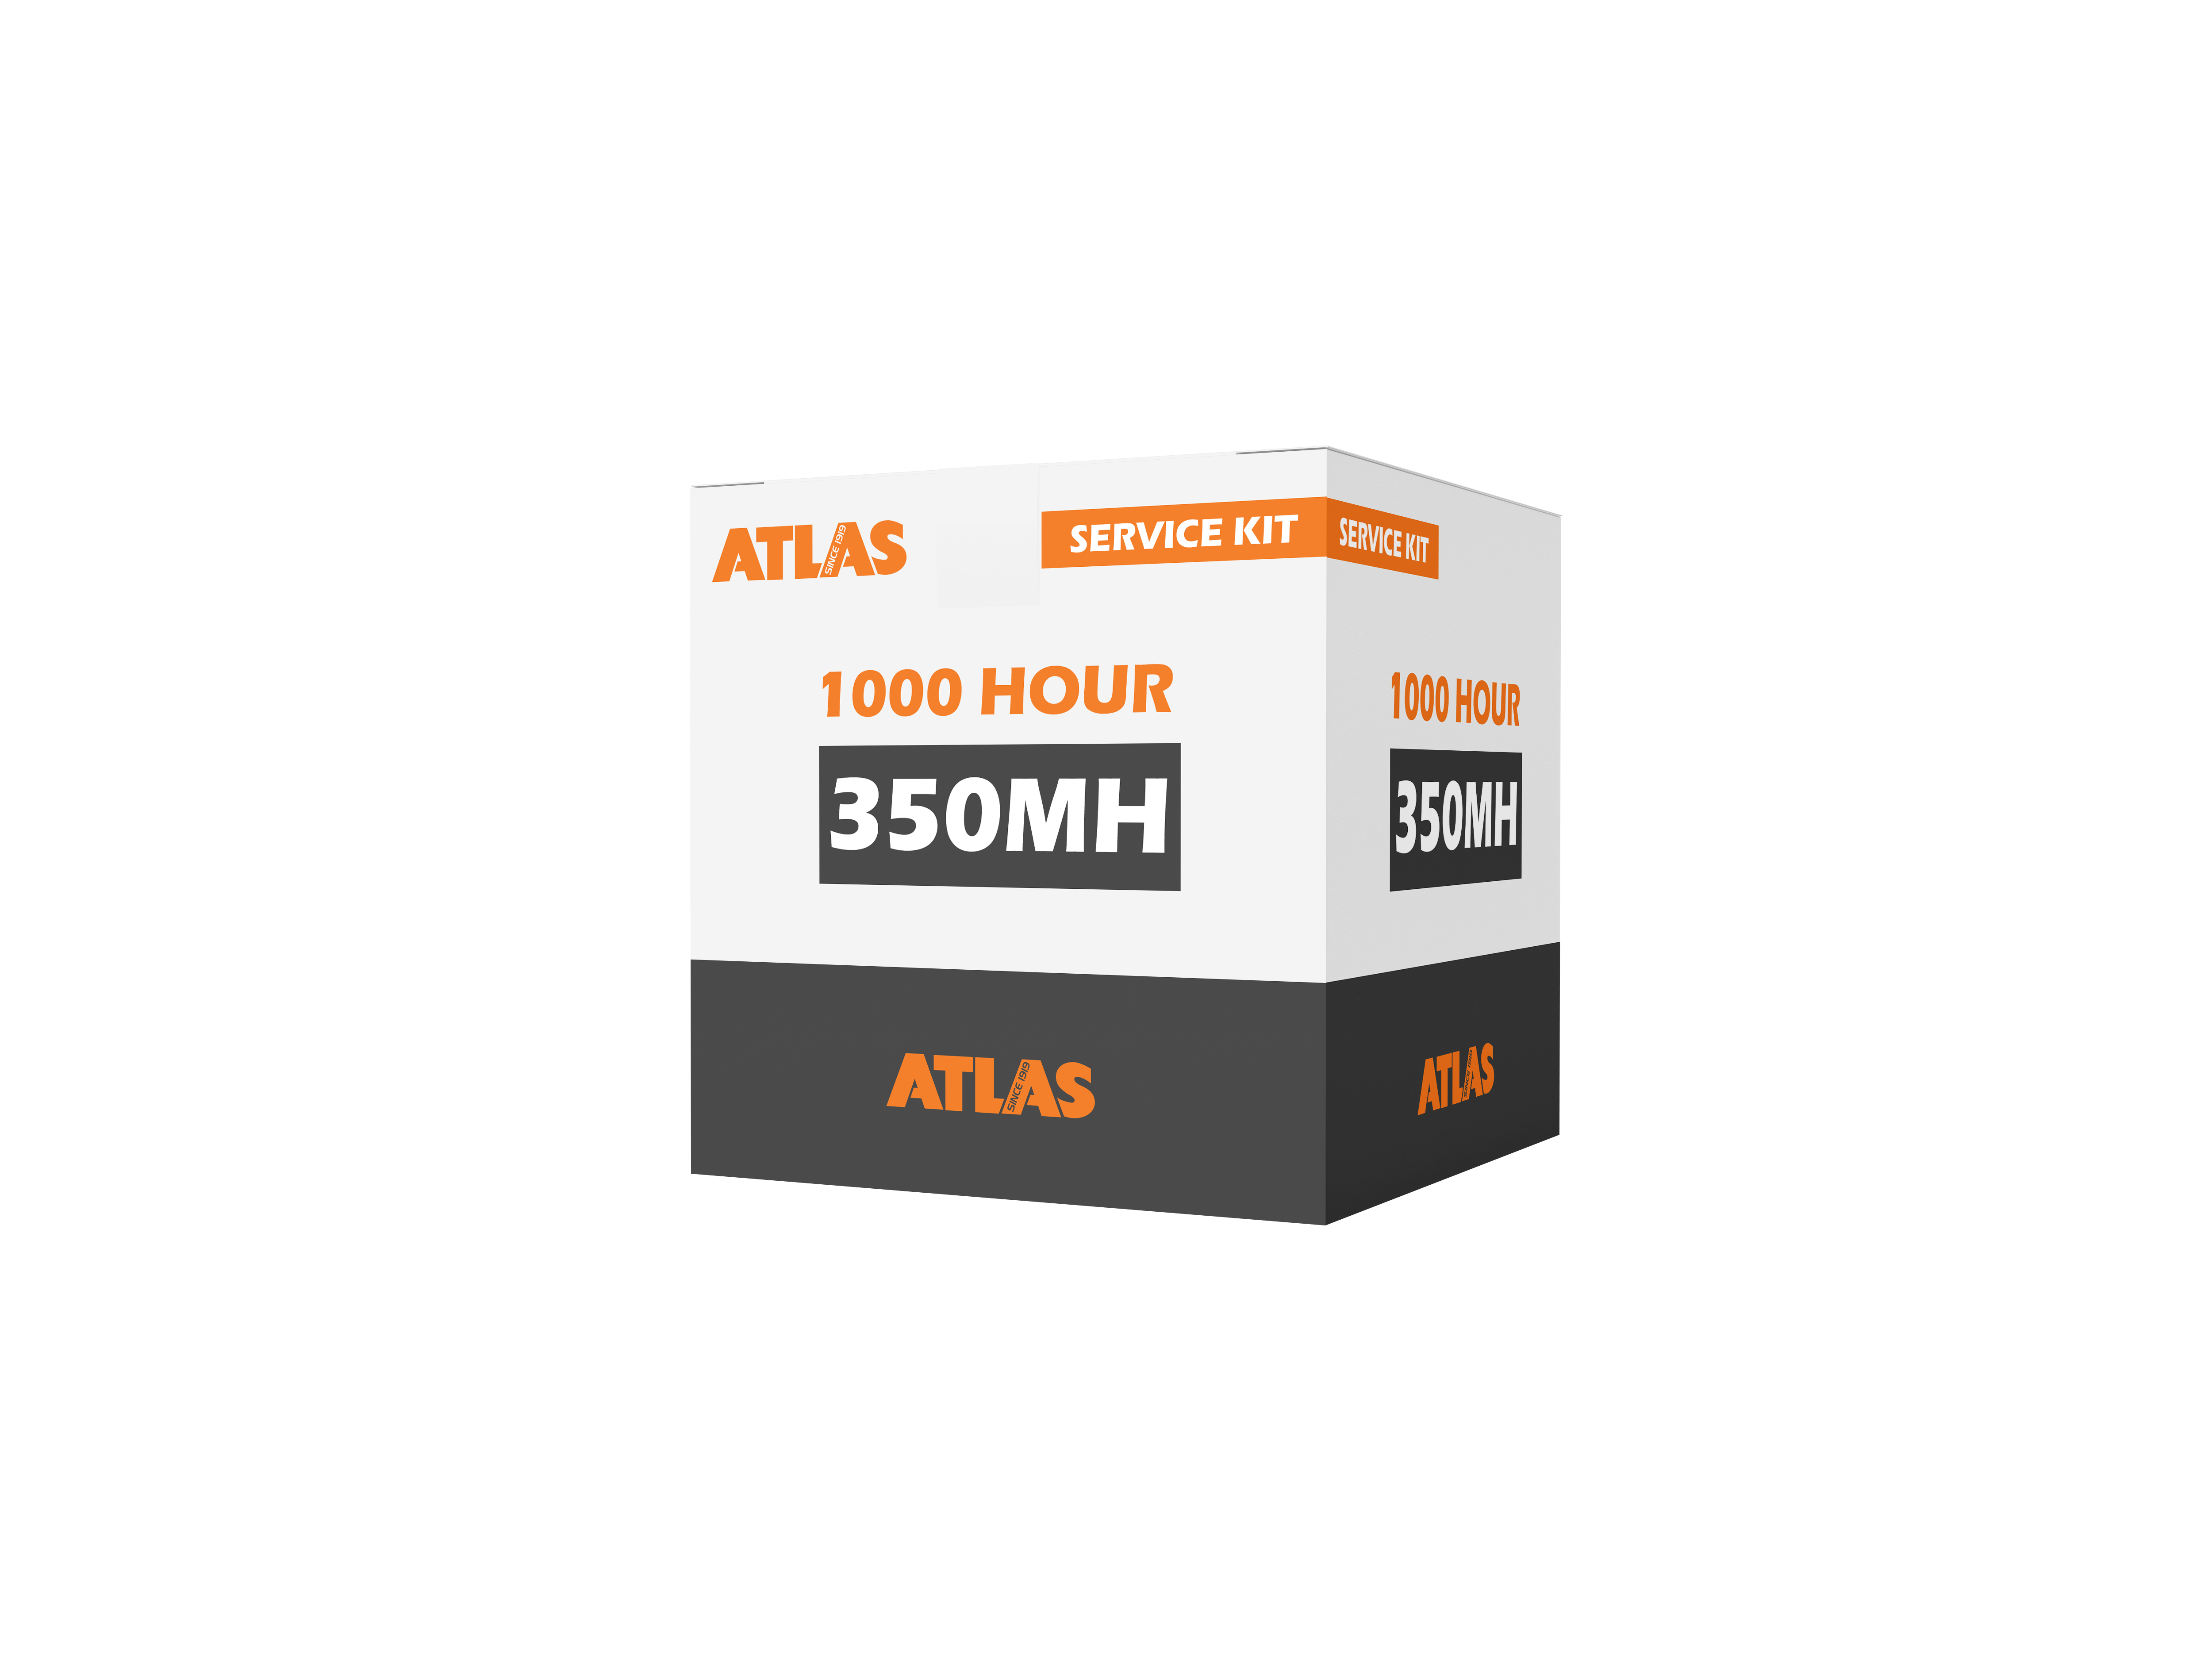 Atlas 350MH 1000 Hour Service Kit (351 series)